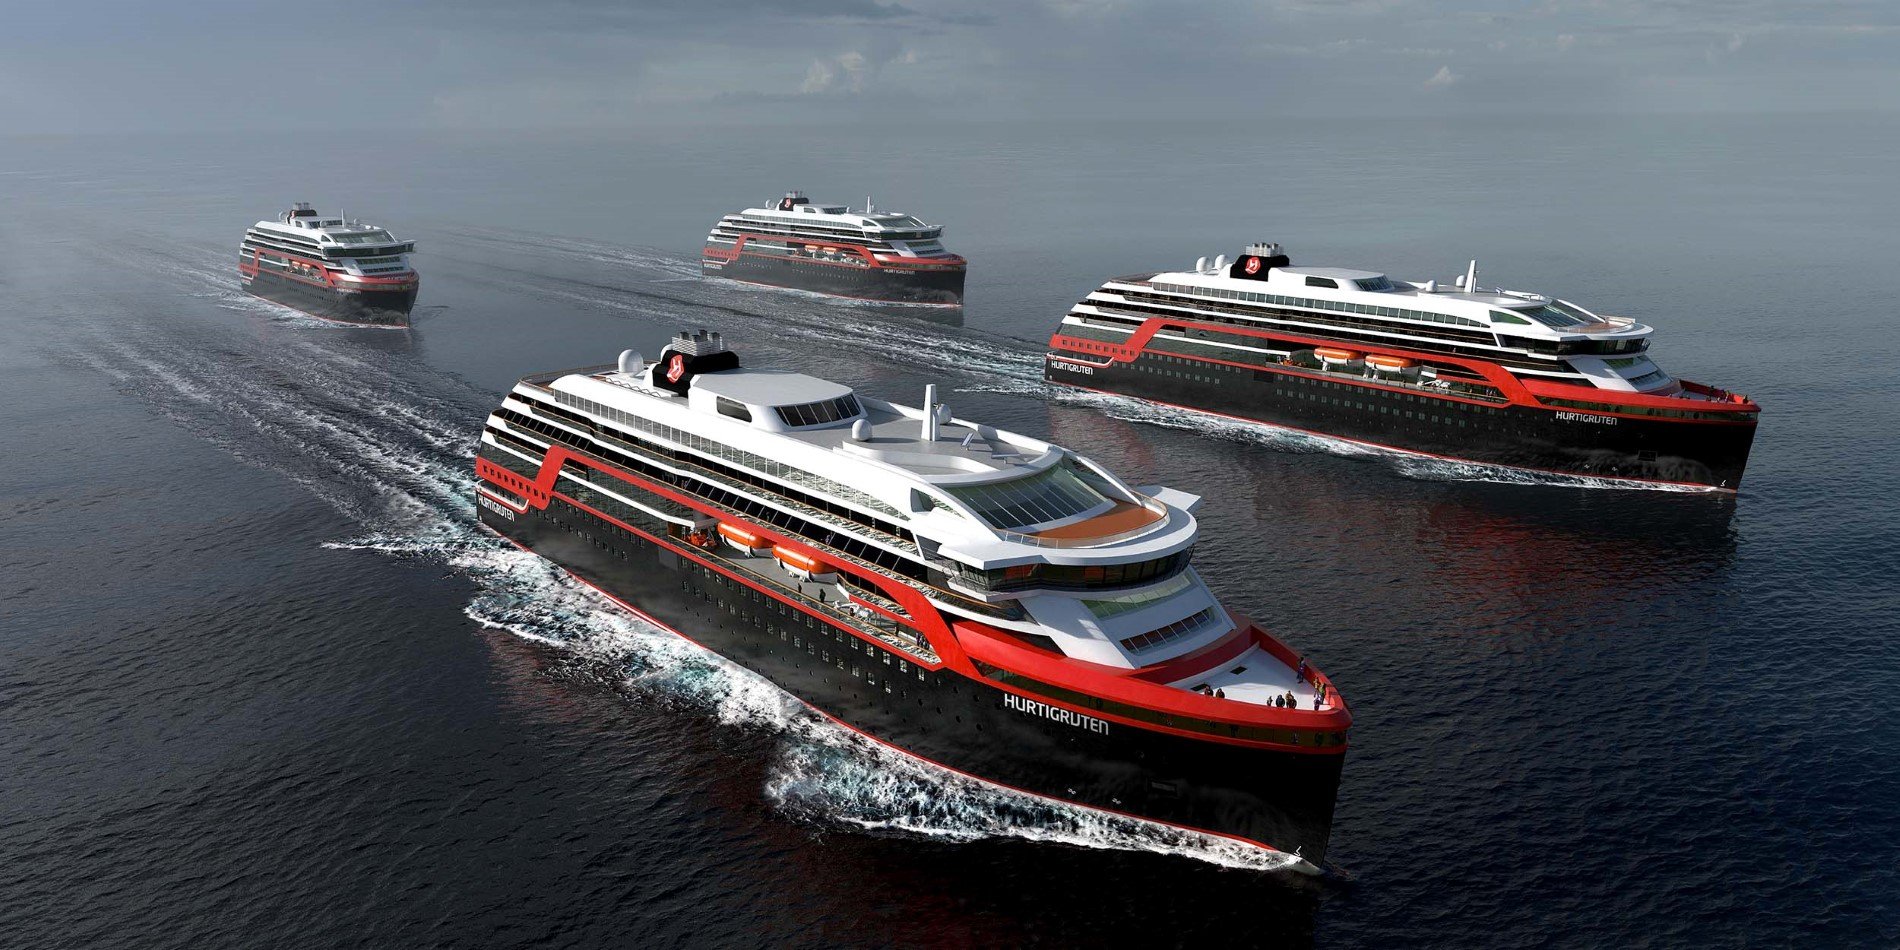 4 new explorer ships have been announced by Hurtigruten